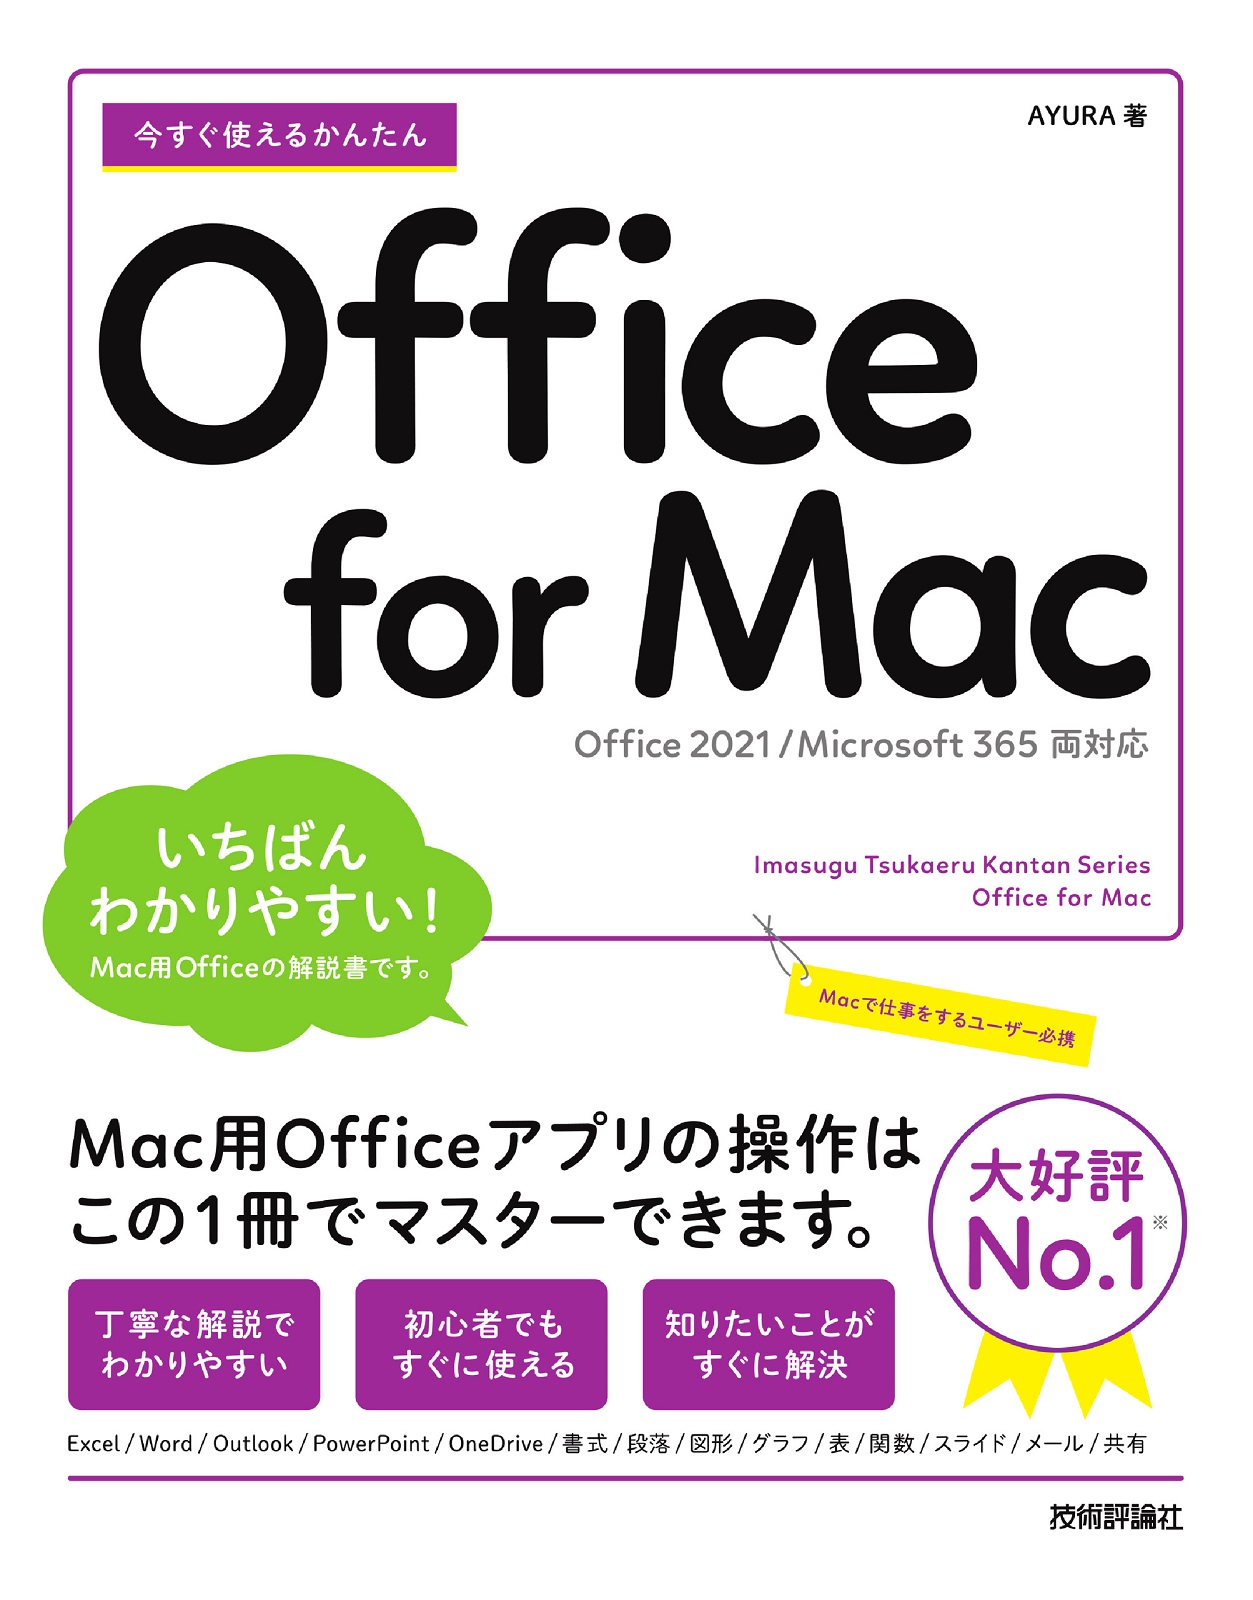 Microsoft office 2021 for Mac